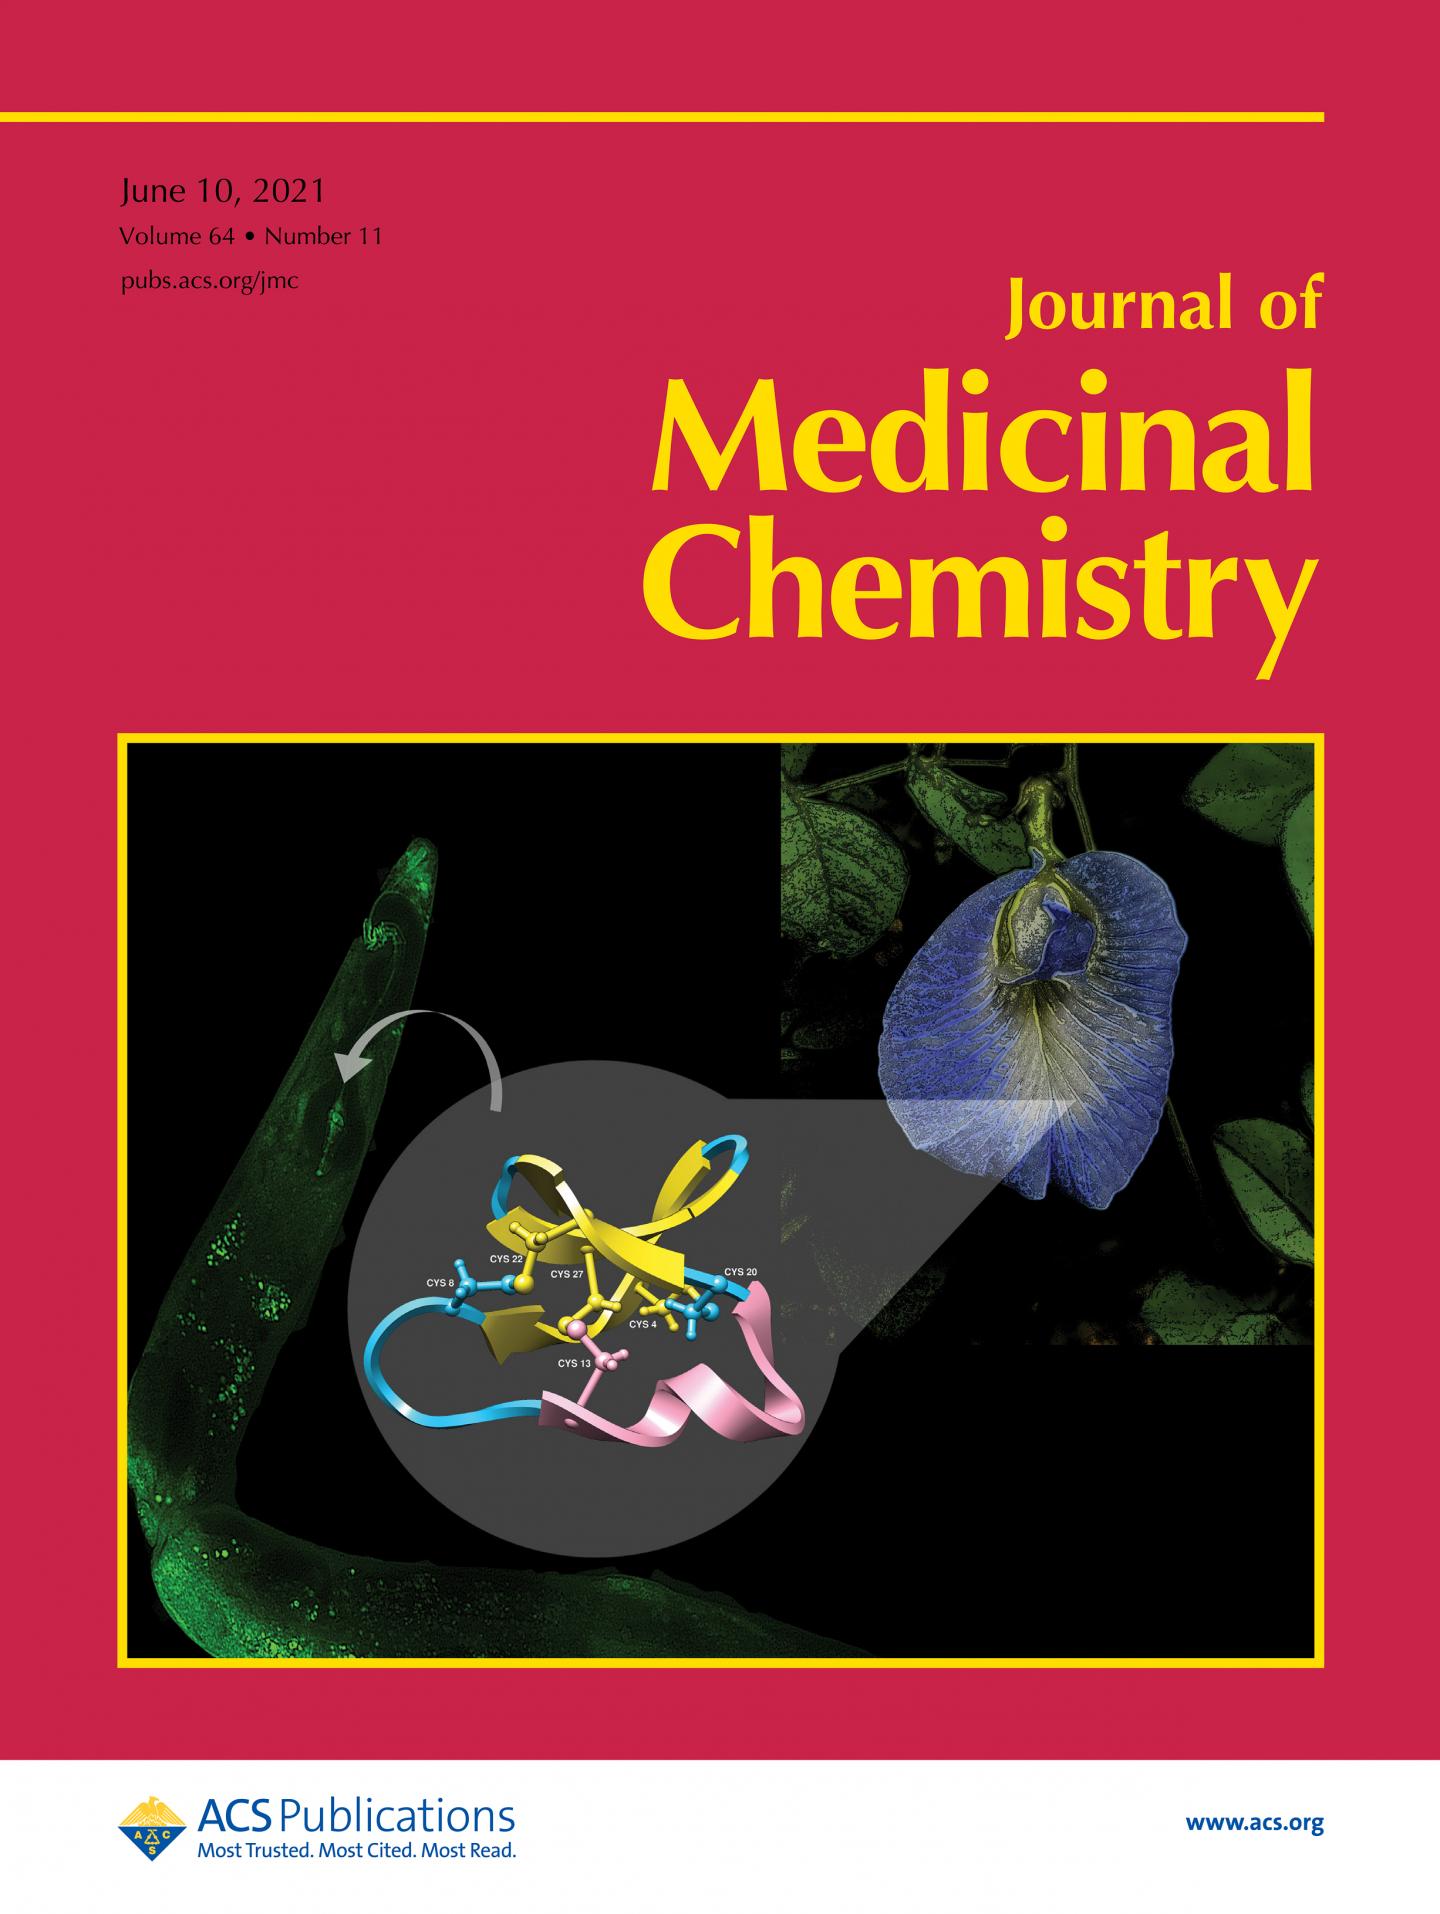 The Cover of the <em>Journal of Medicinal Chemistry</em>